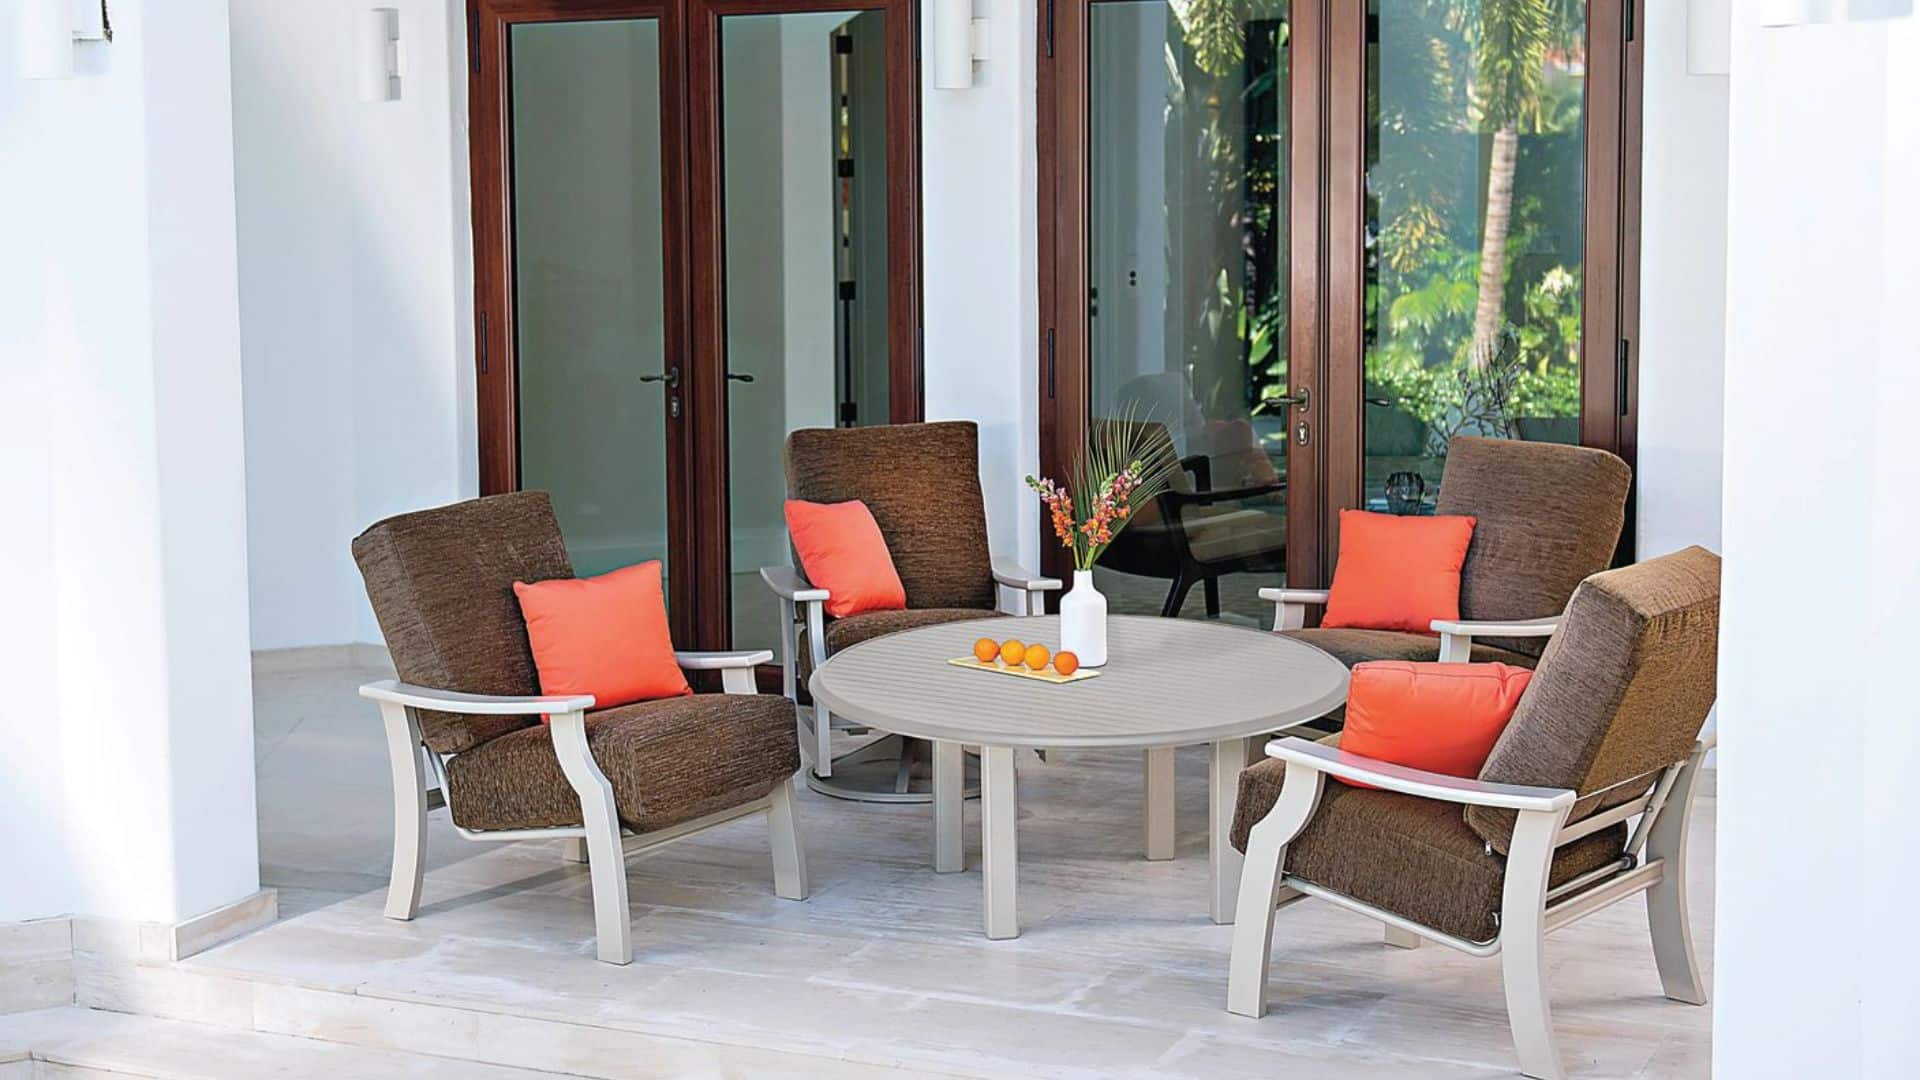 patio furniture, outdoor furniture